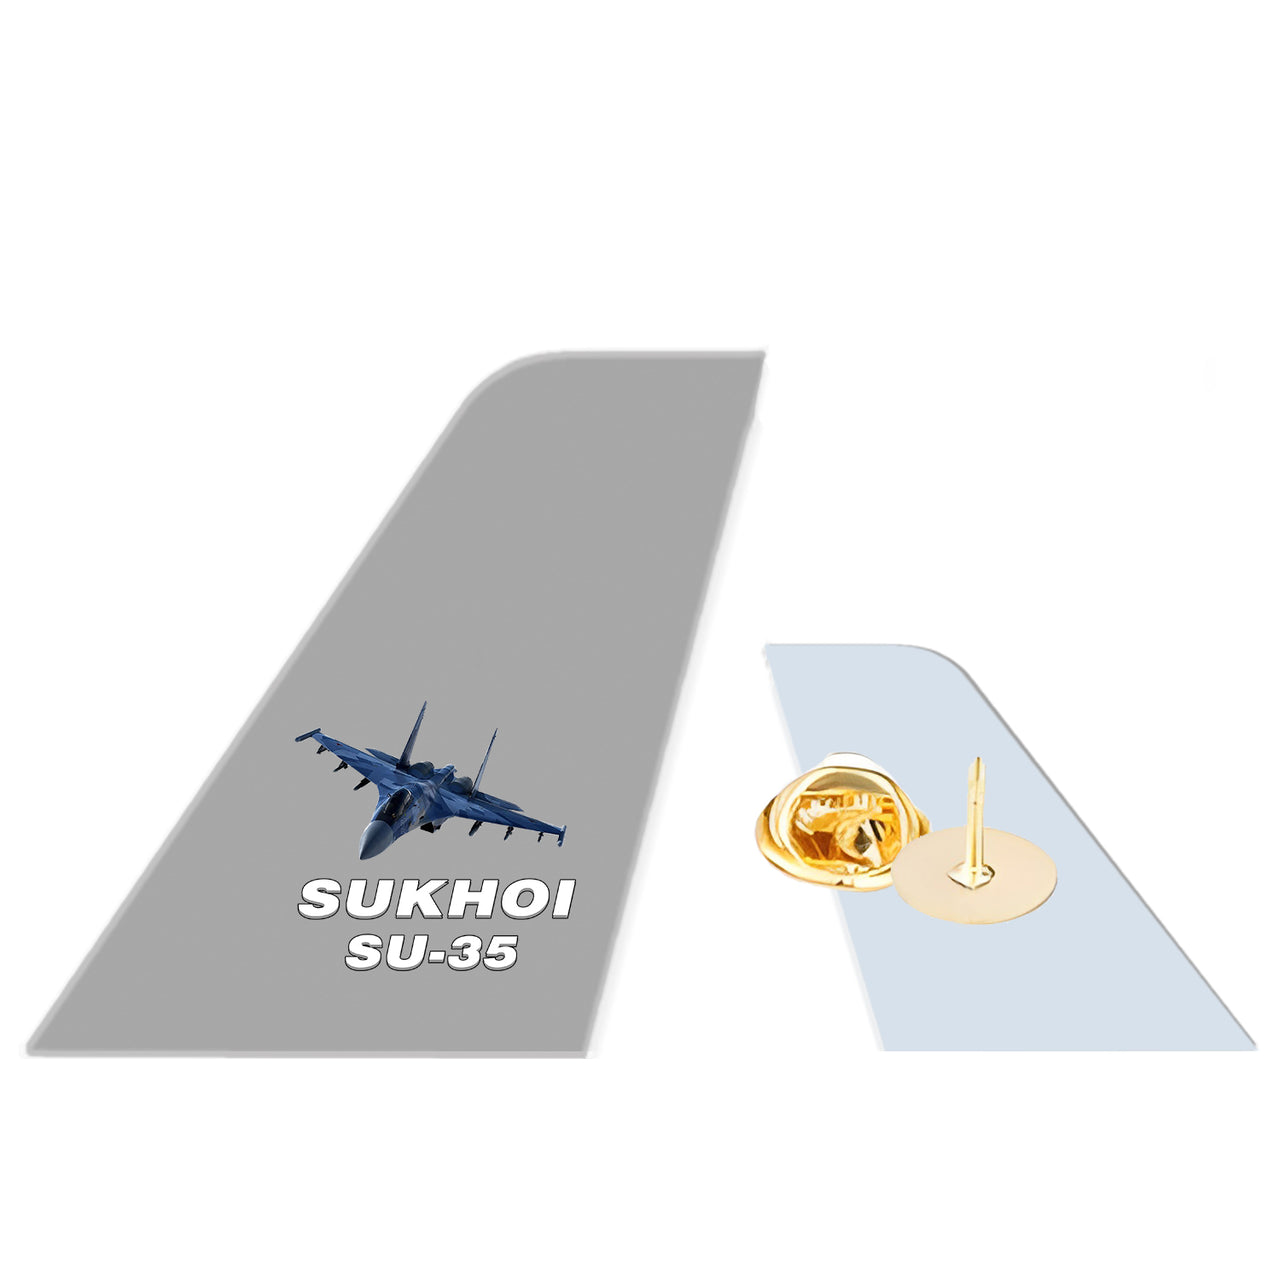 The Sukhoi SU-35 Designed Tail Shape Badges & Pins